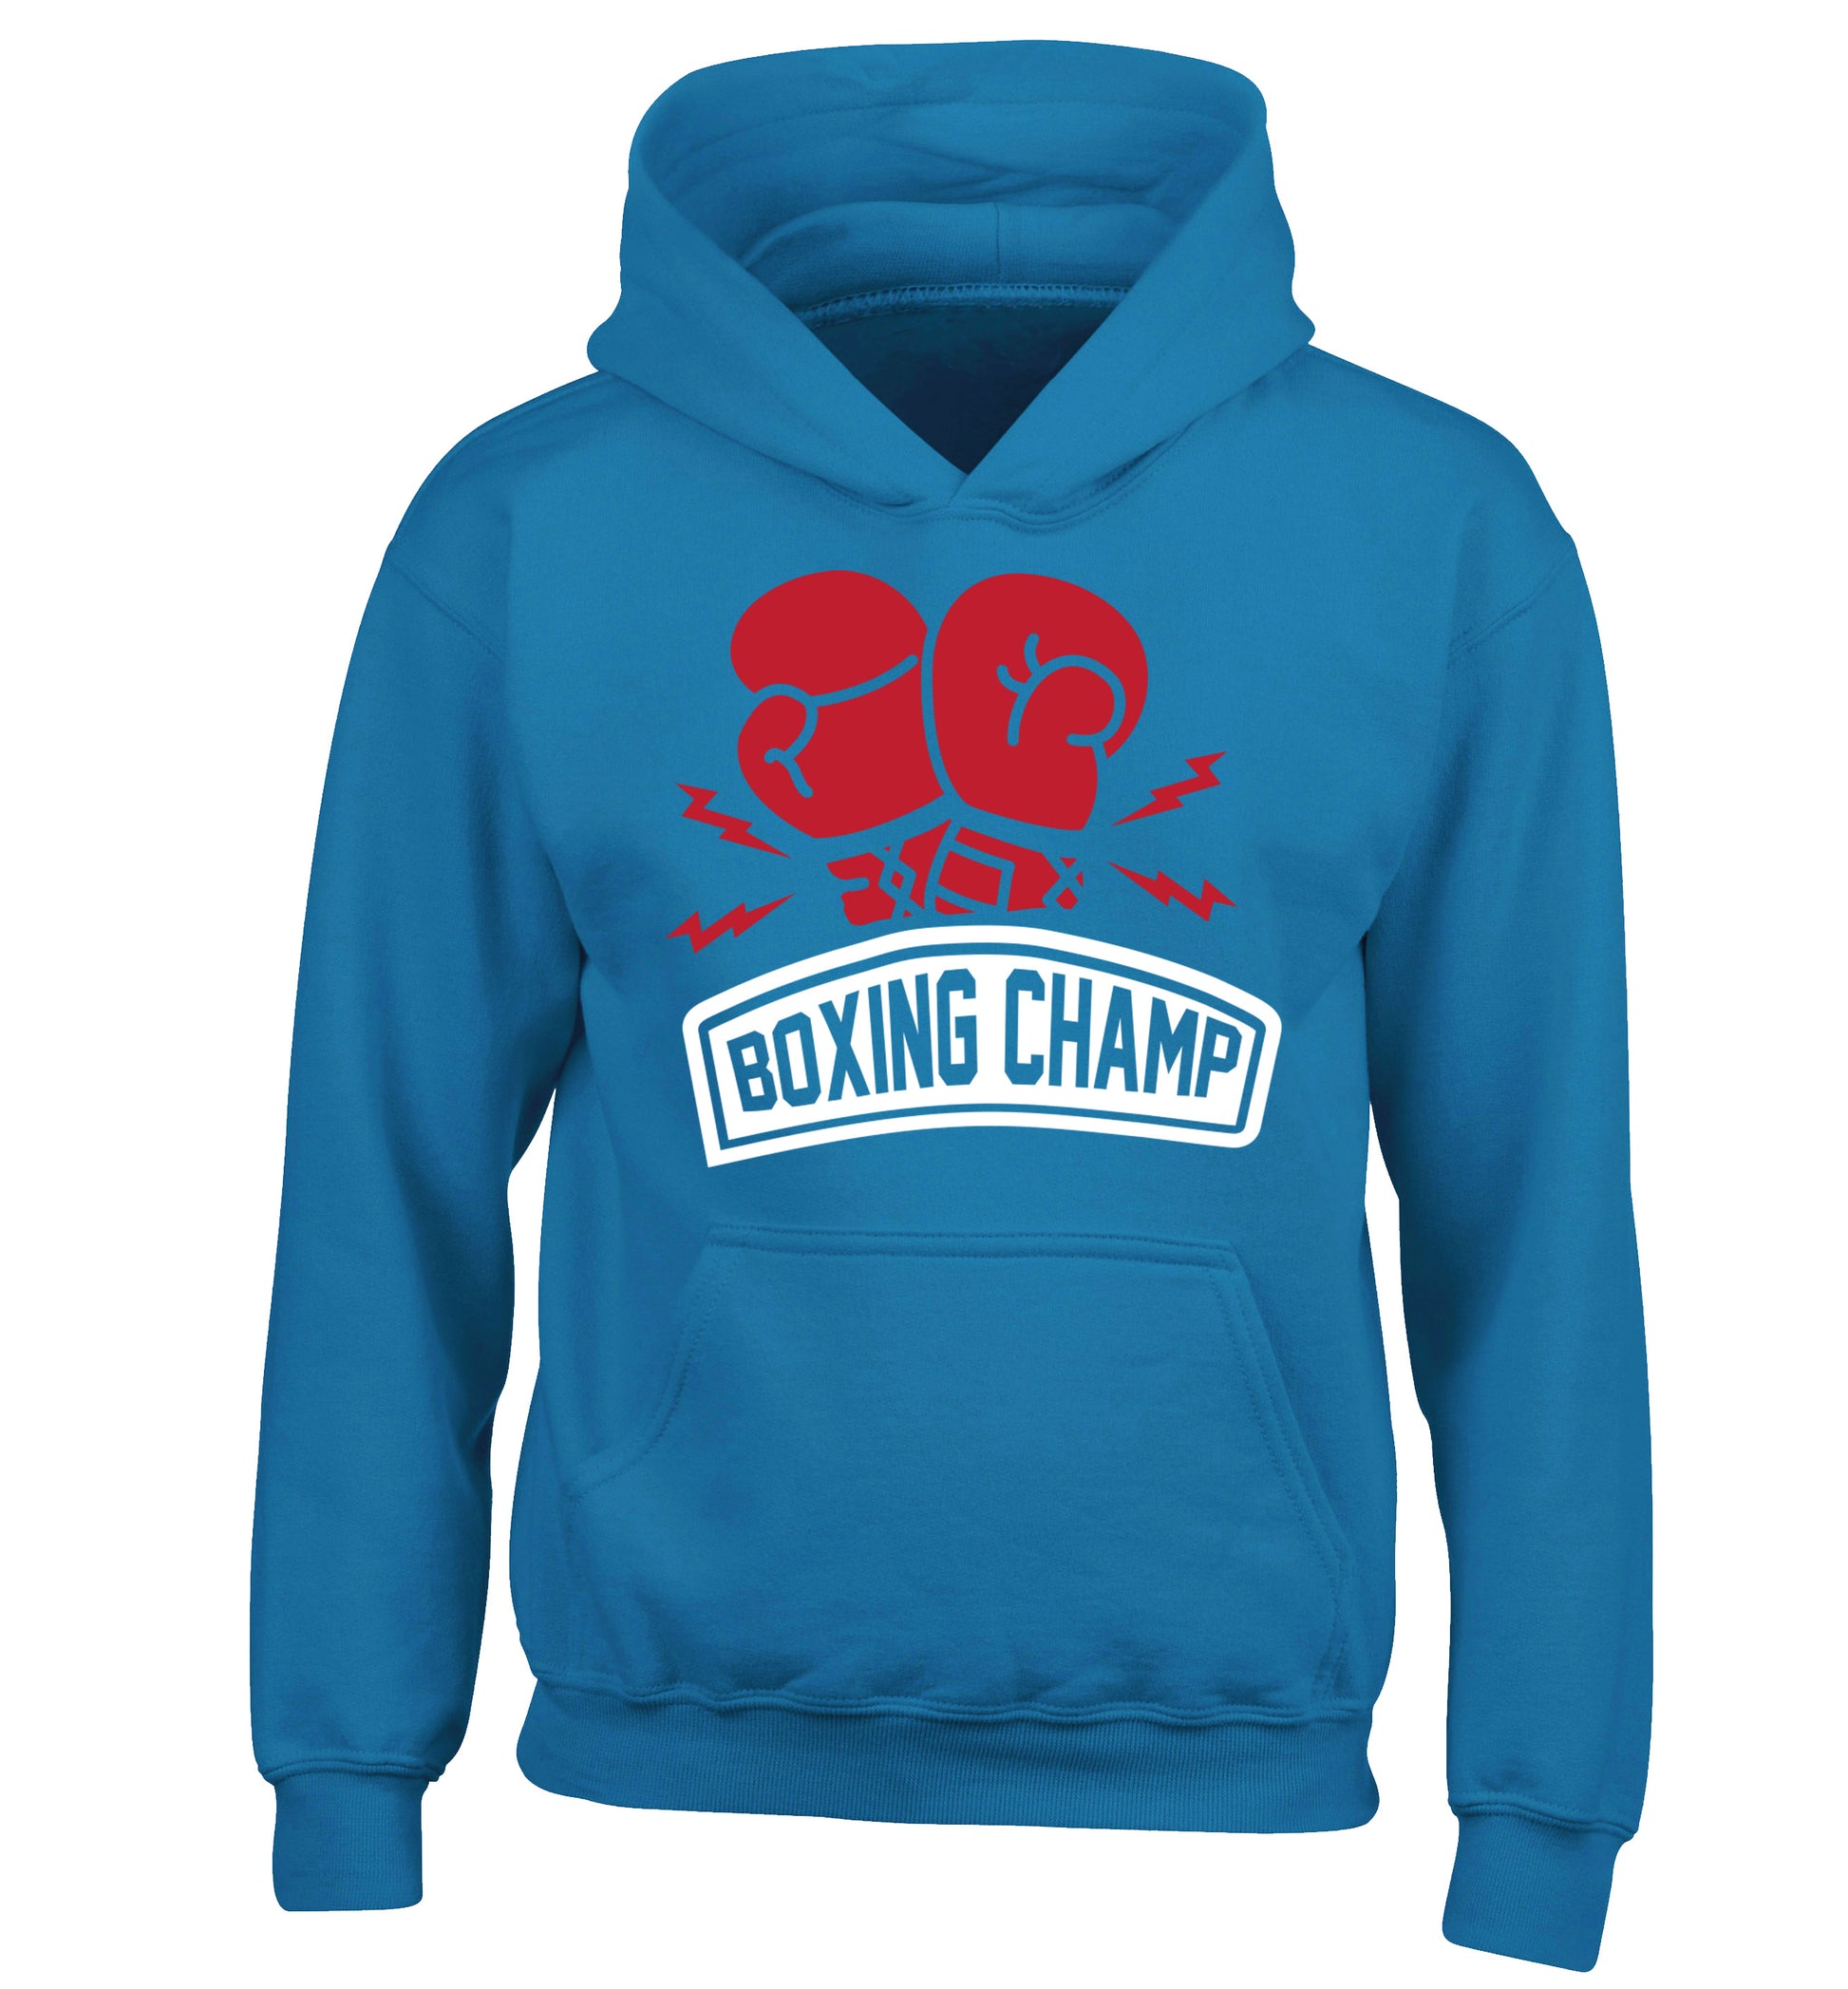 Boxing Champ children's blue hoodie 12-13 Years